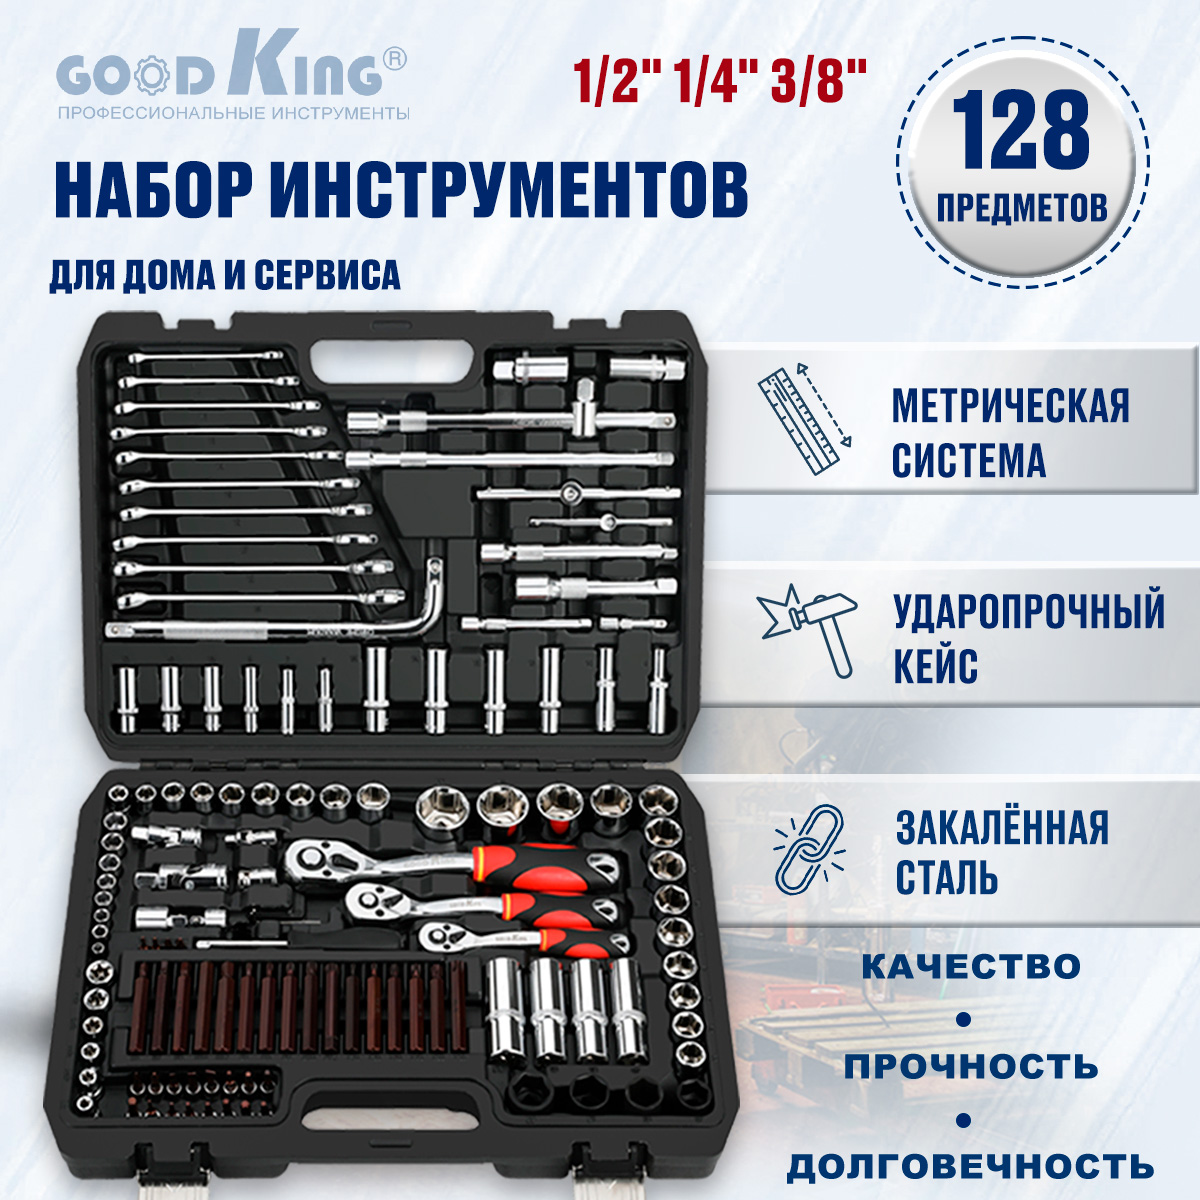 Набор инструментов 129 предметов для автомобиля GOODKING B-10128 набор строителя с инструментами игровой 9 предметов трансформеры